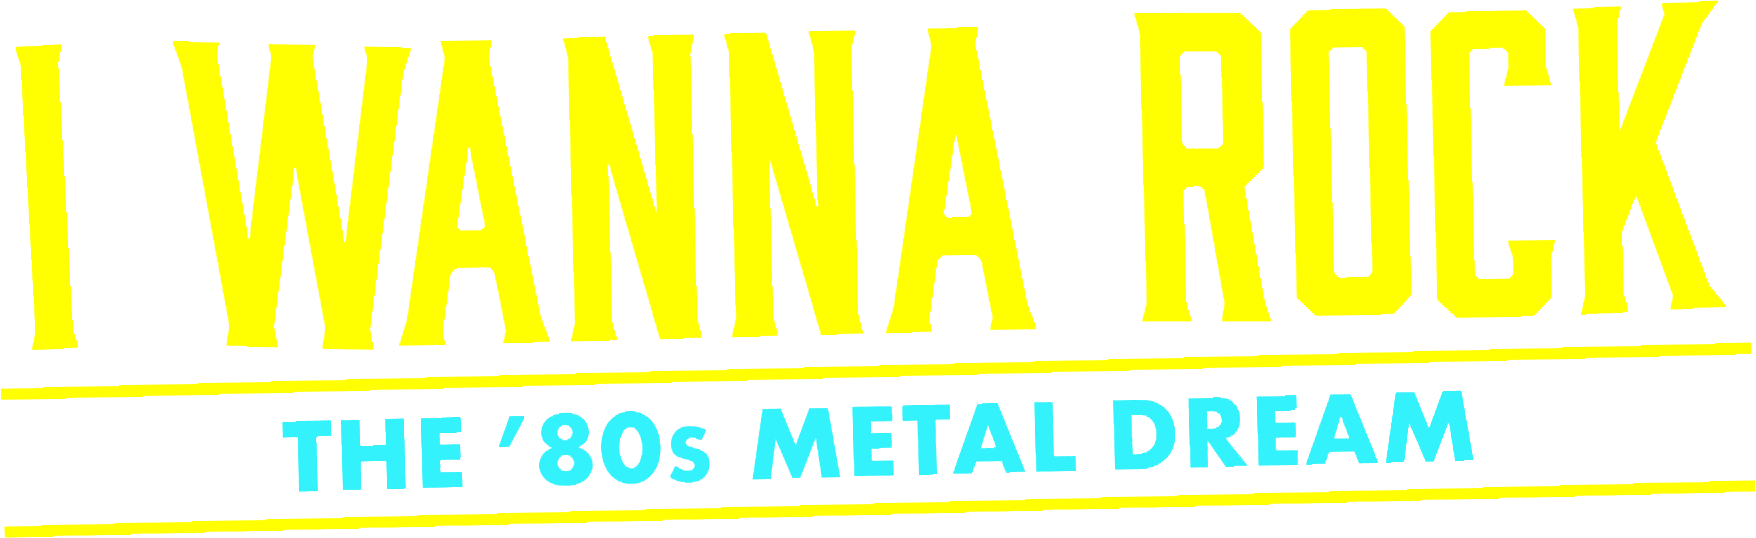 I Wanna Rock - The '80s Metal Dream logo